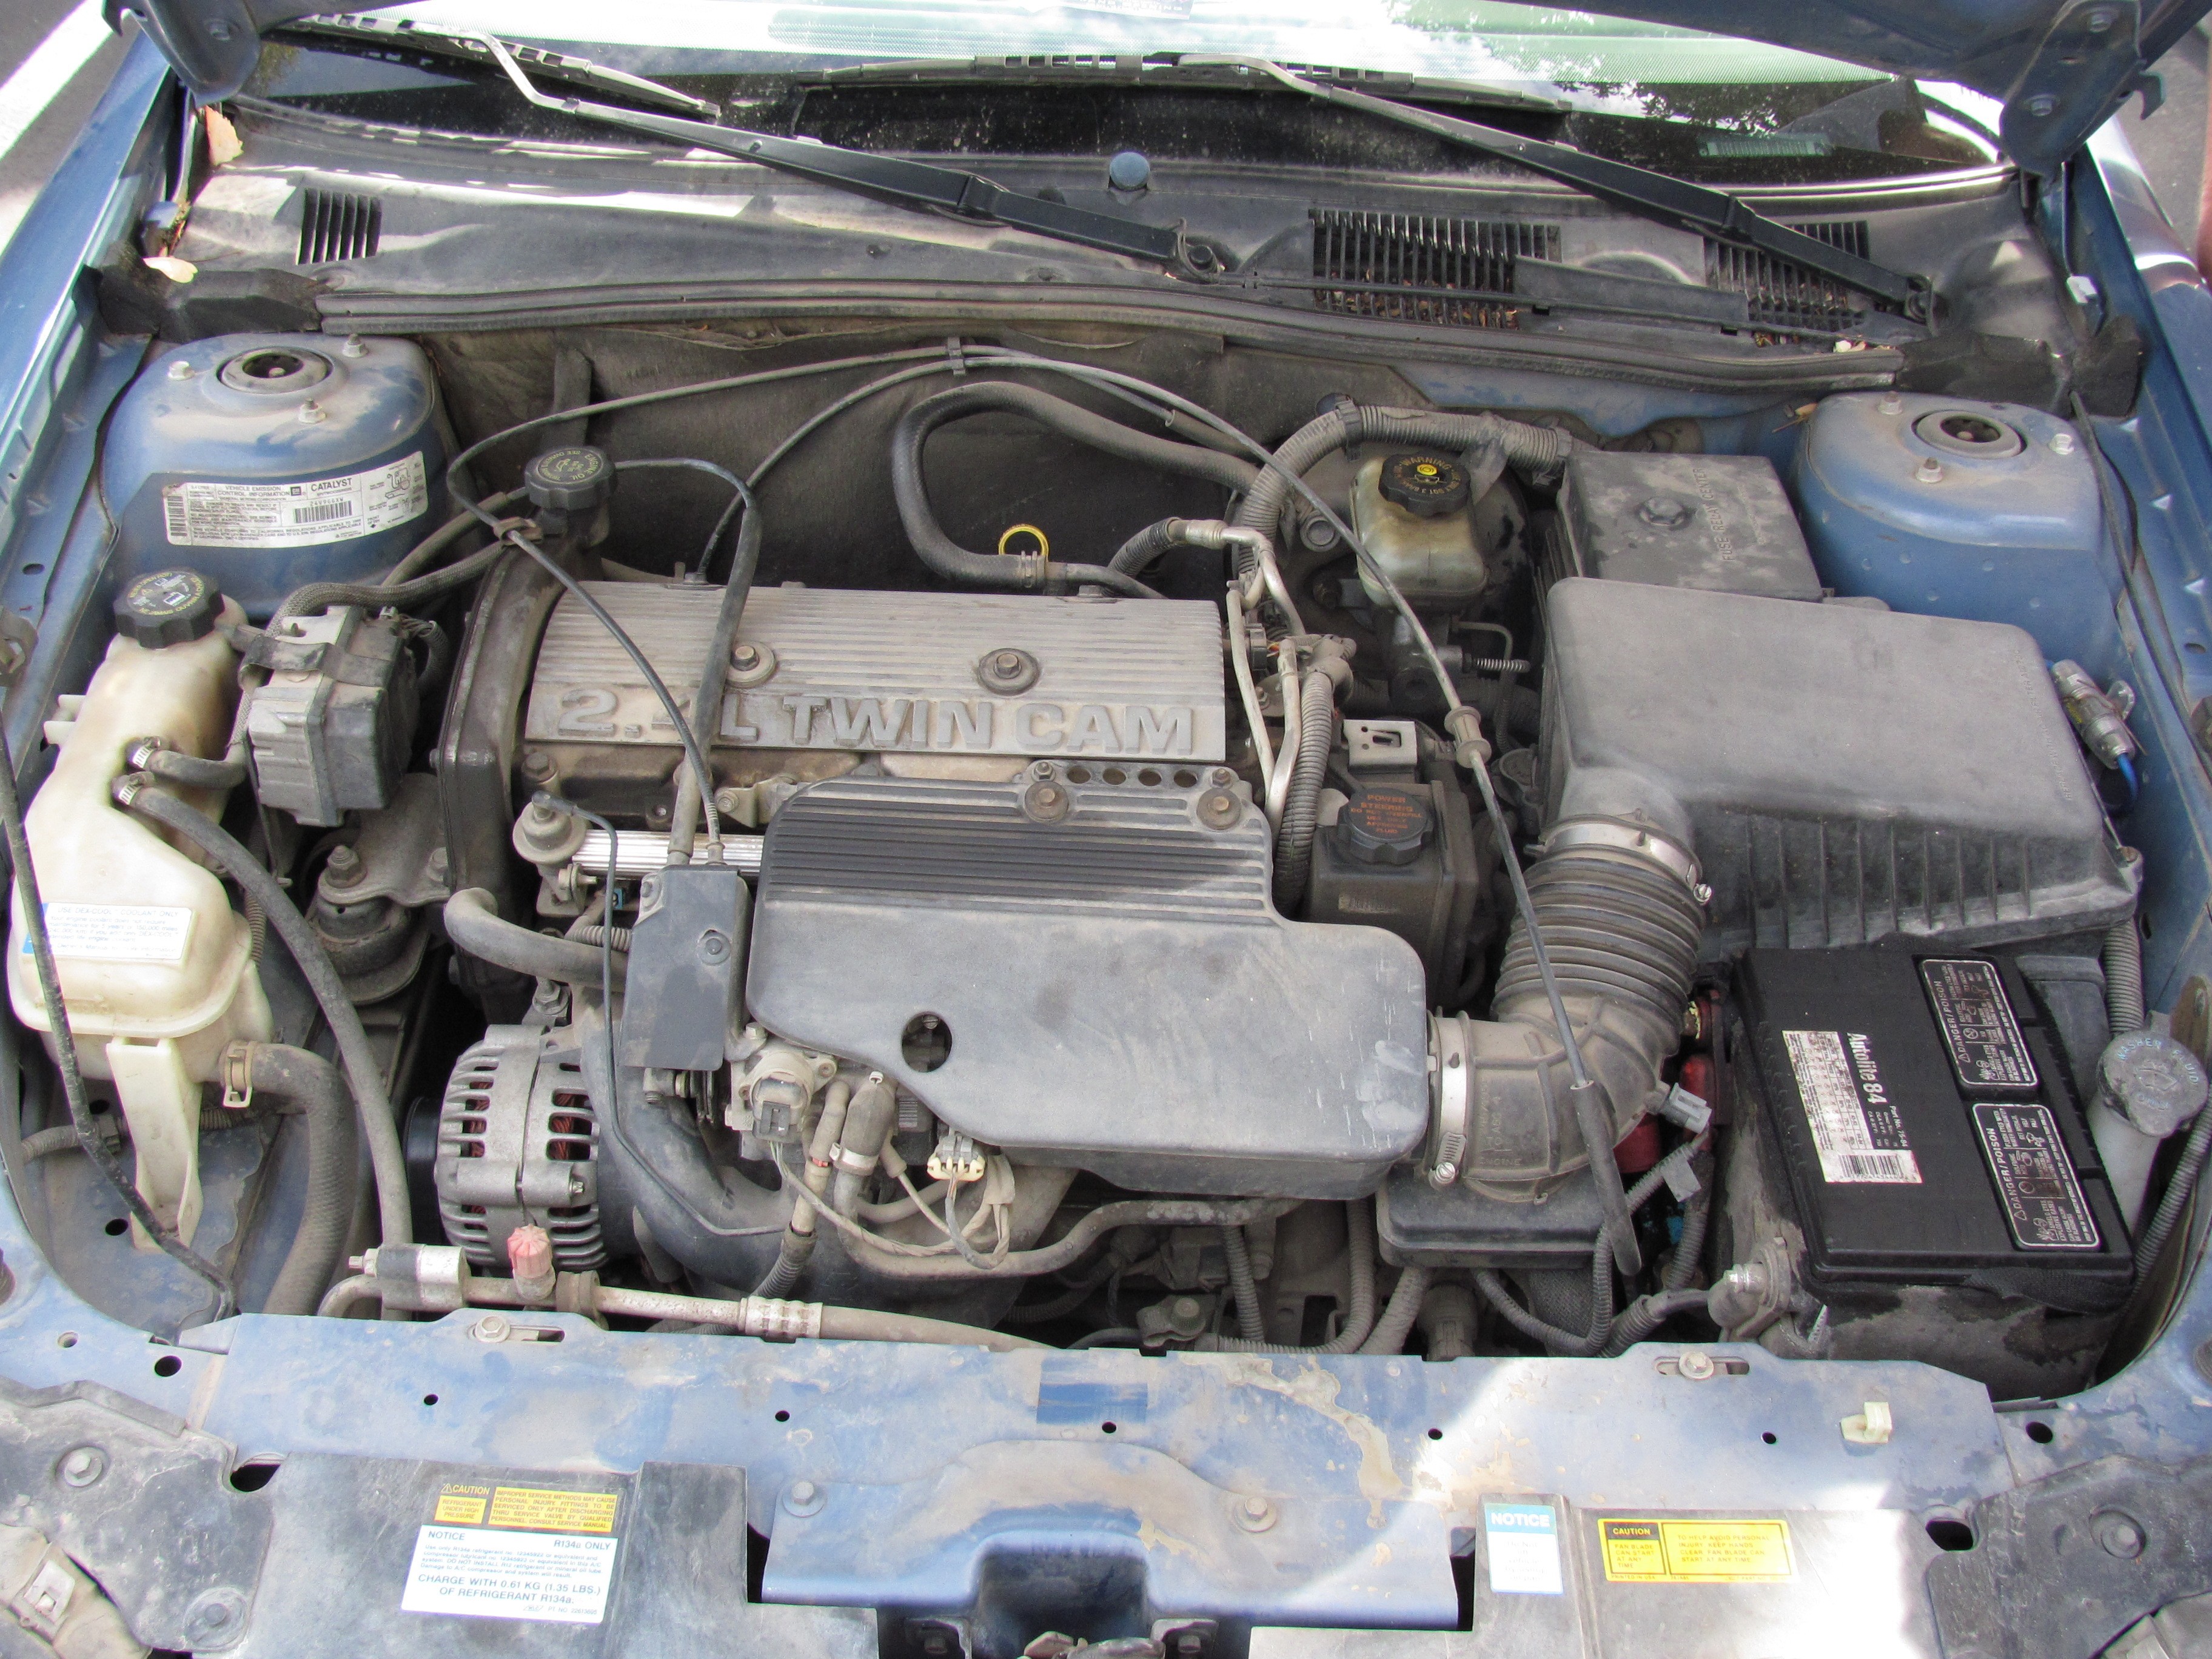 2003 Chevy Cavalier Engine Diagram 2001 Chevy Malibu Engine Diagram Wiring Diagram Home Of 2003 Chevy Cavalier Engine Diagram